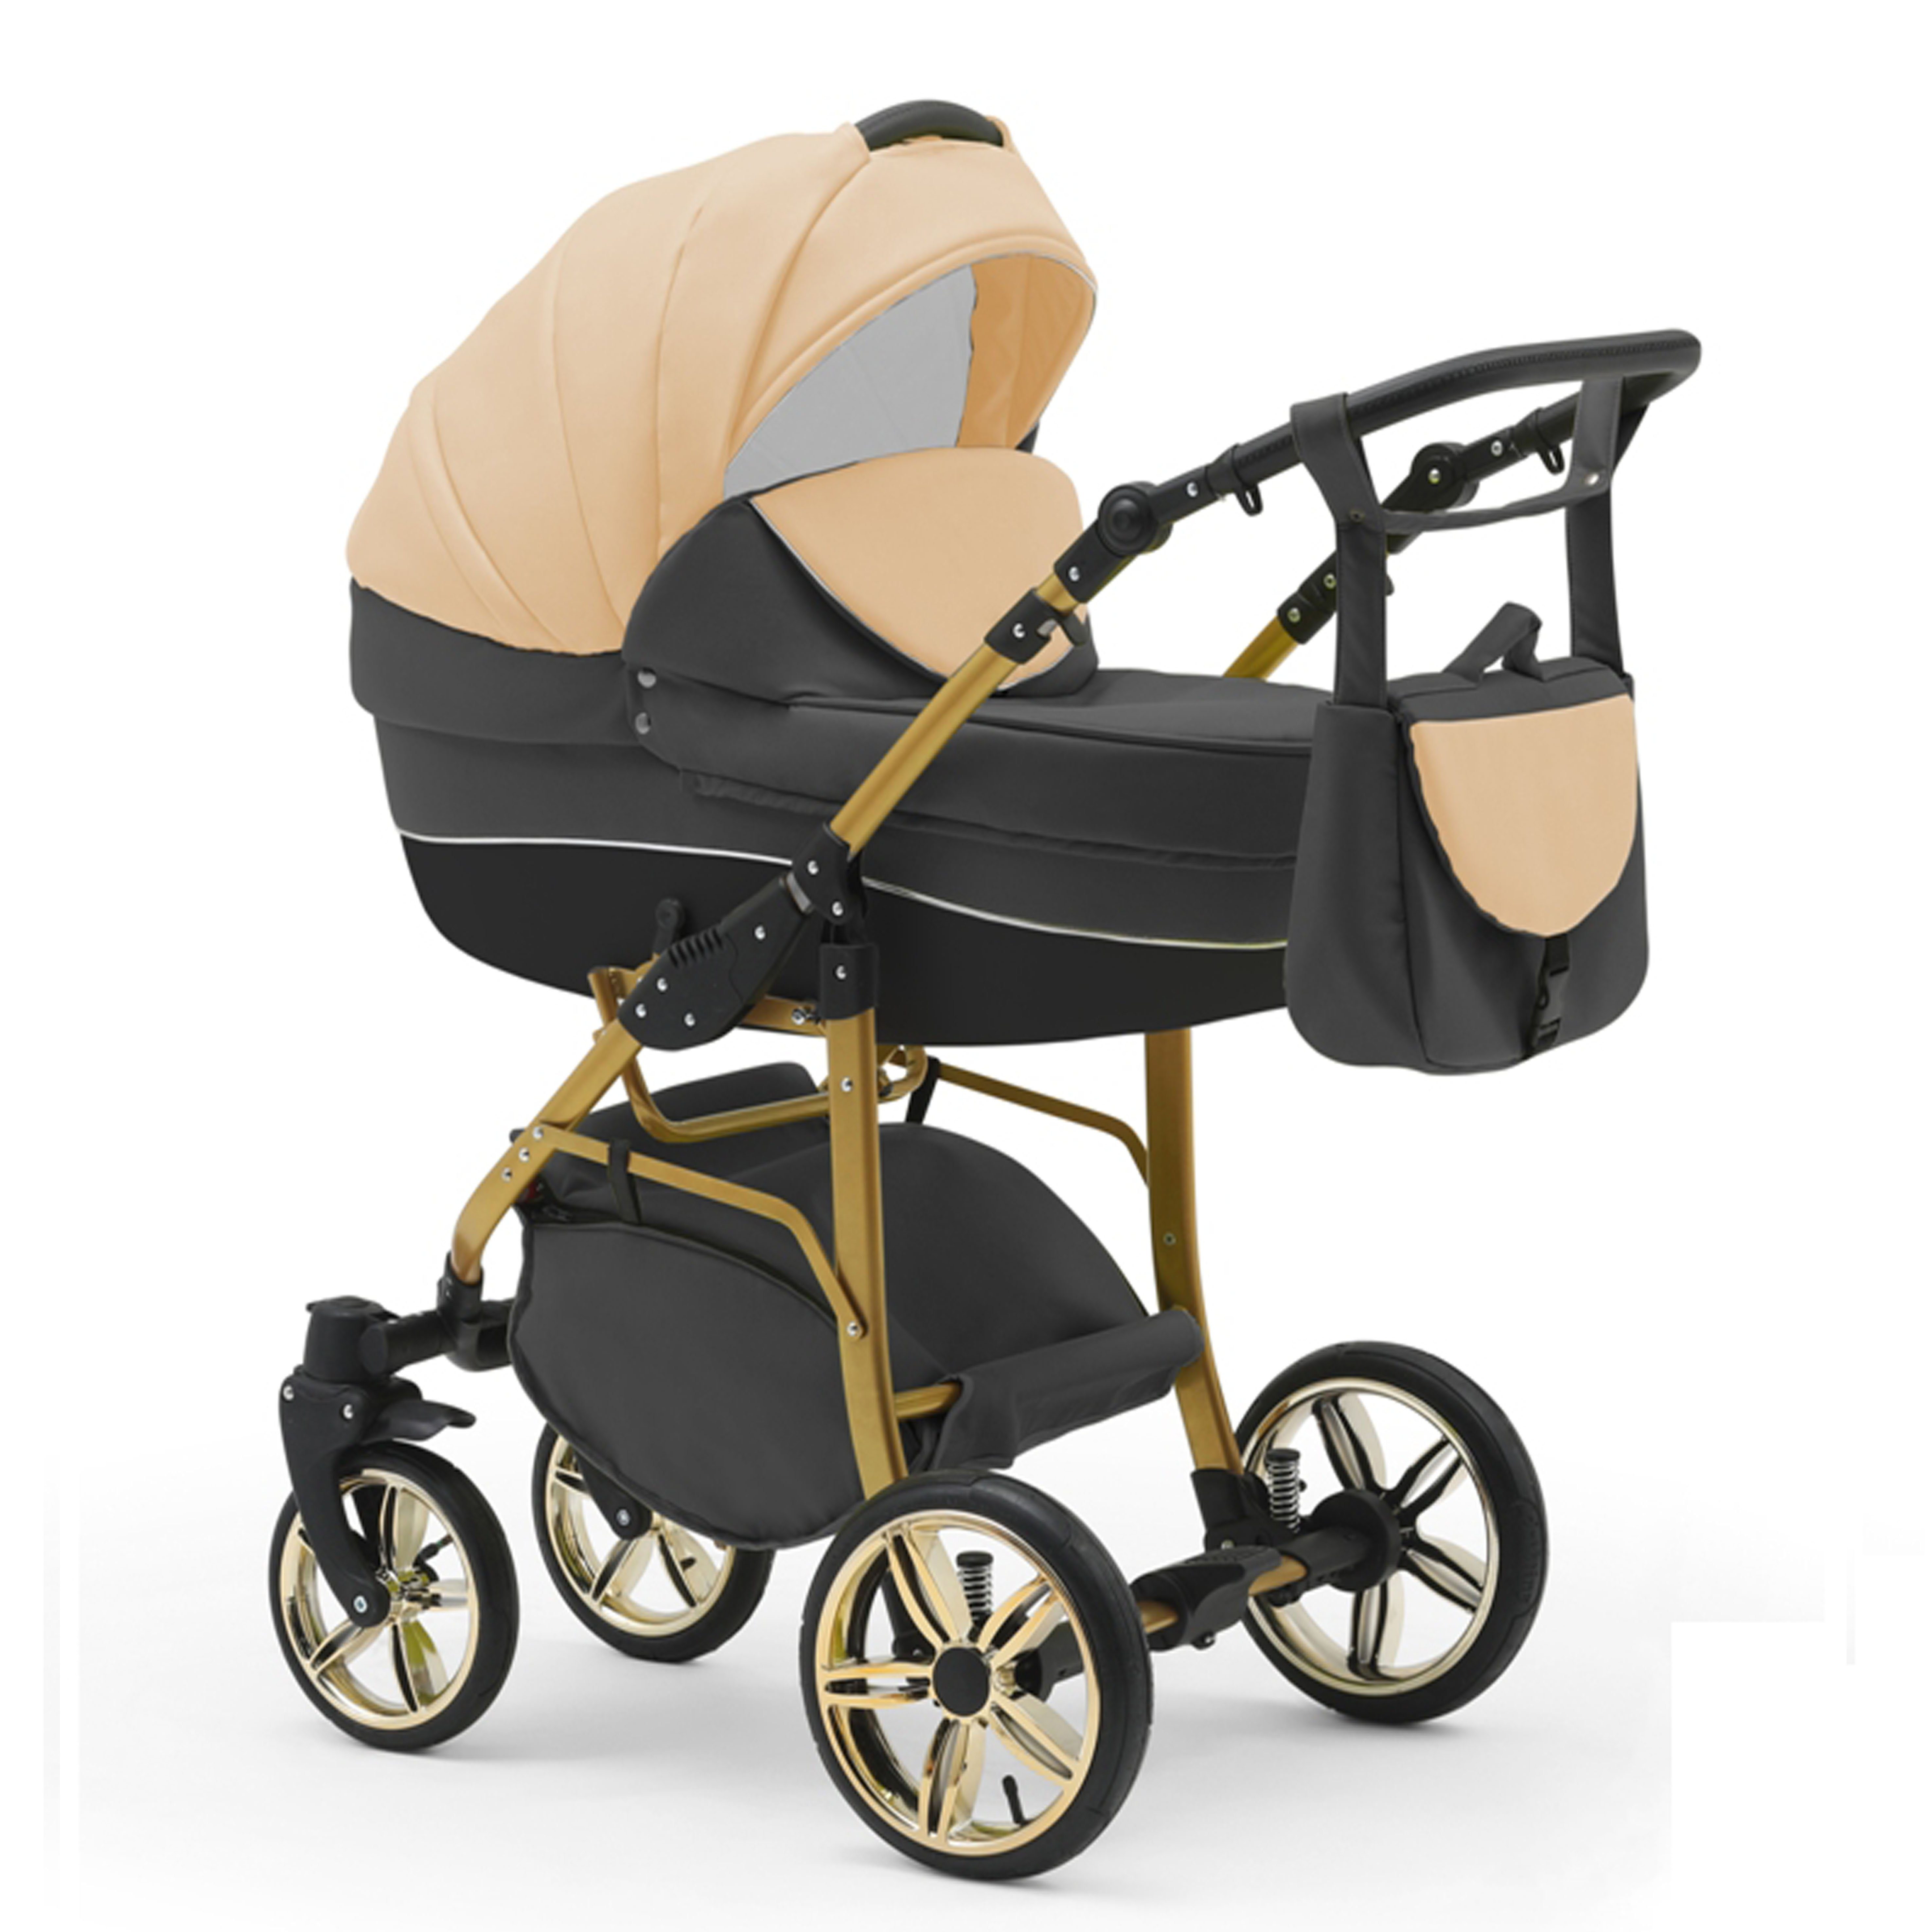 Beige-Hellgrau-Schwarz - babies-on-wheels Gold Teile Farben in in Kinderwagen-Set Cosmo ECO 2 - 46 1 13 Kombi-Kinderwagen